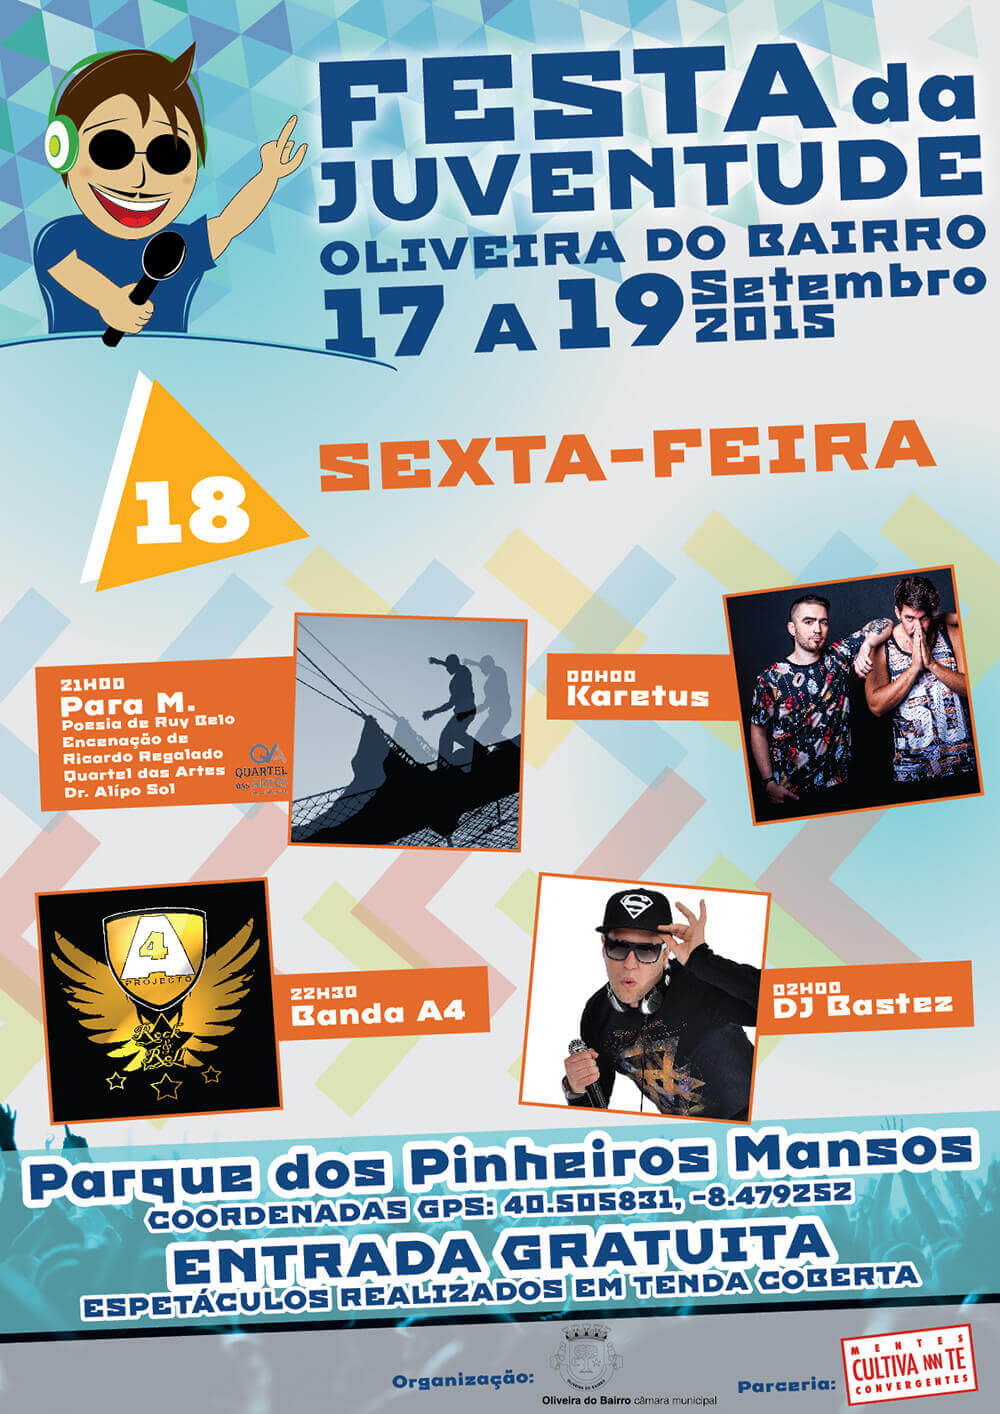 Festa da Juventude de Oliveira do Bairro - Poster for the 18th day | Way2Start - Design & Digital Agency